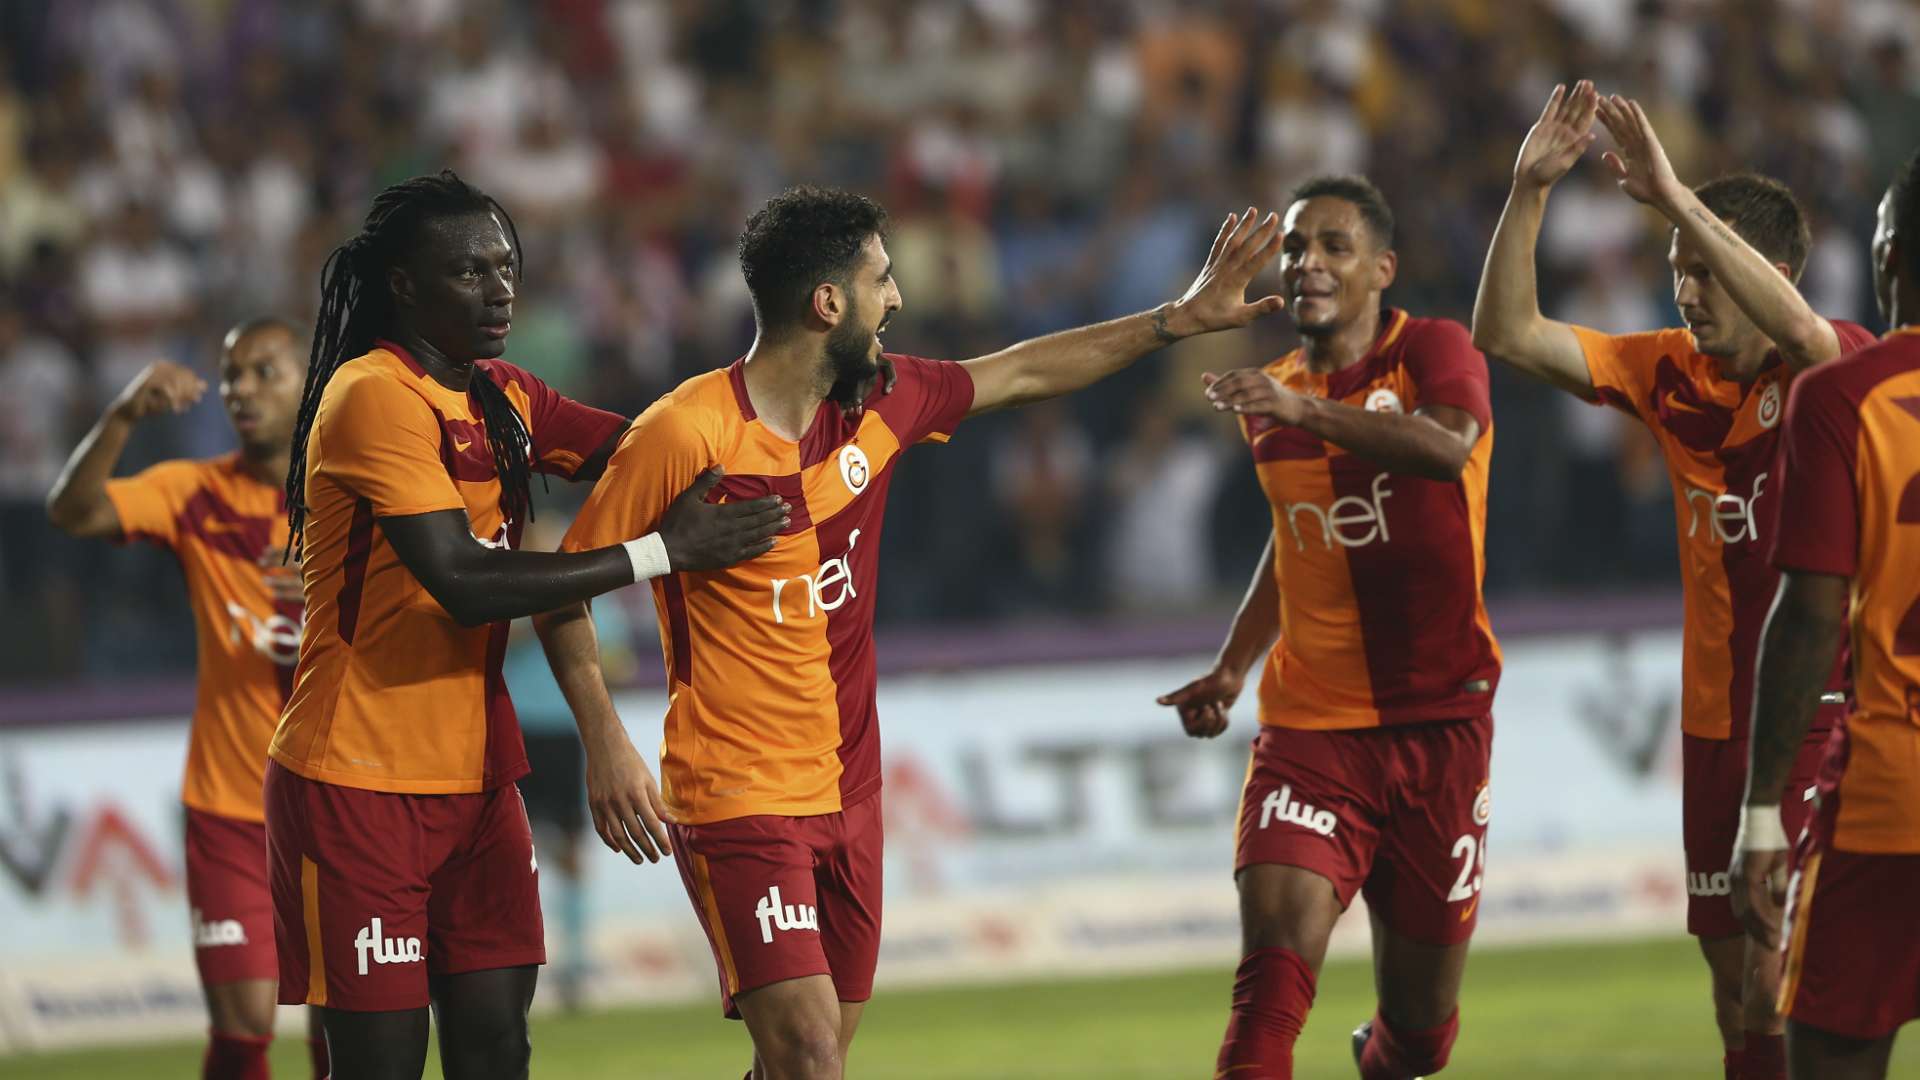 Galatasaray goal celebration vs Osmanlispor 08192017